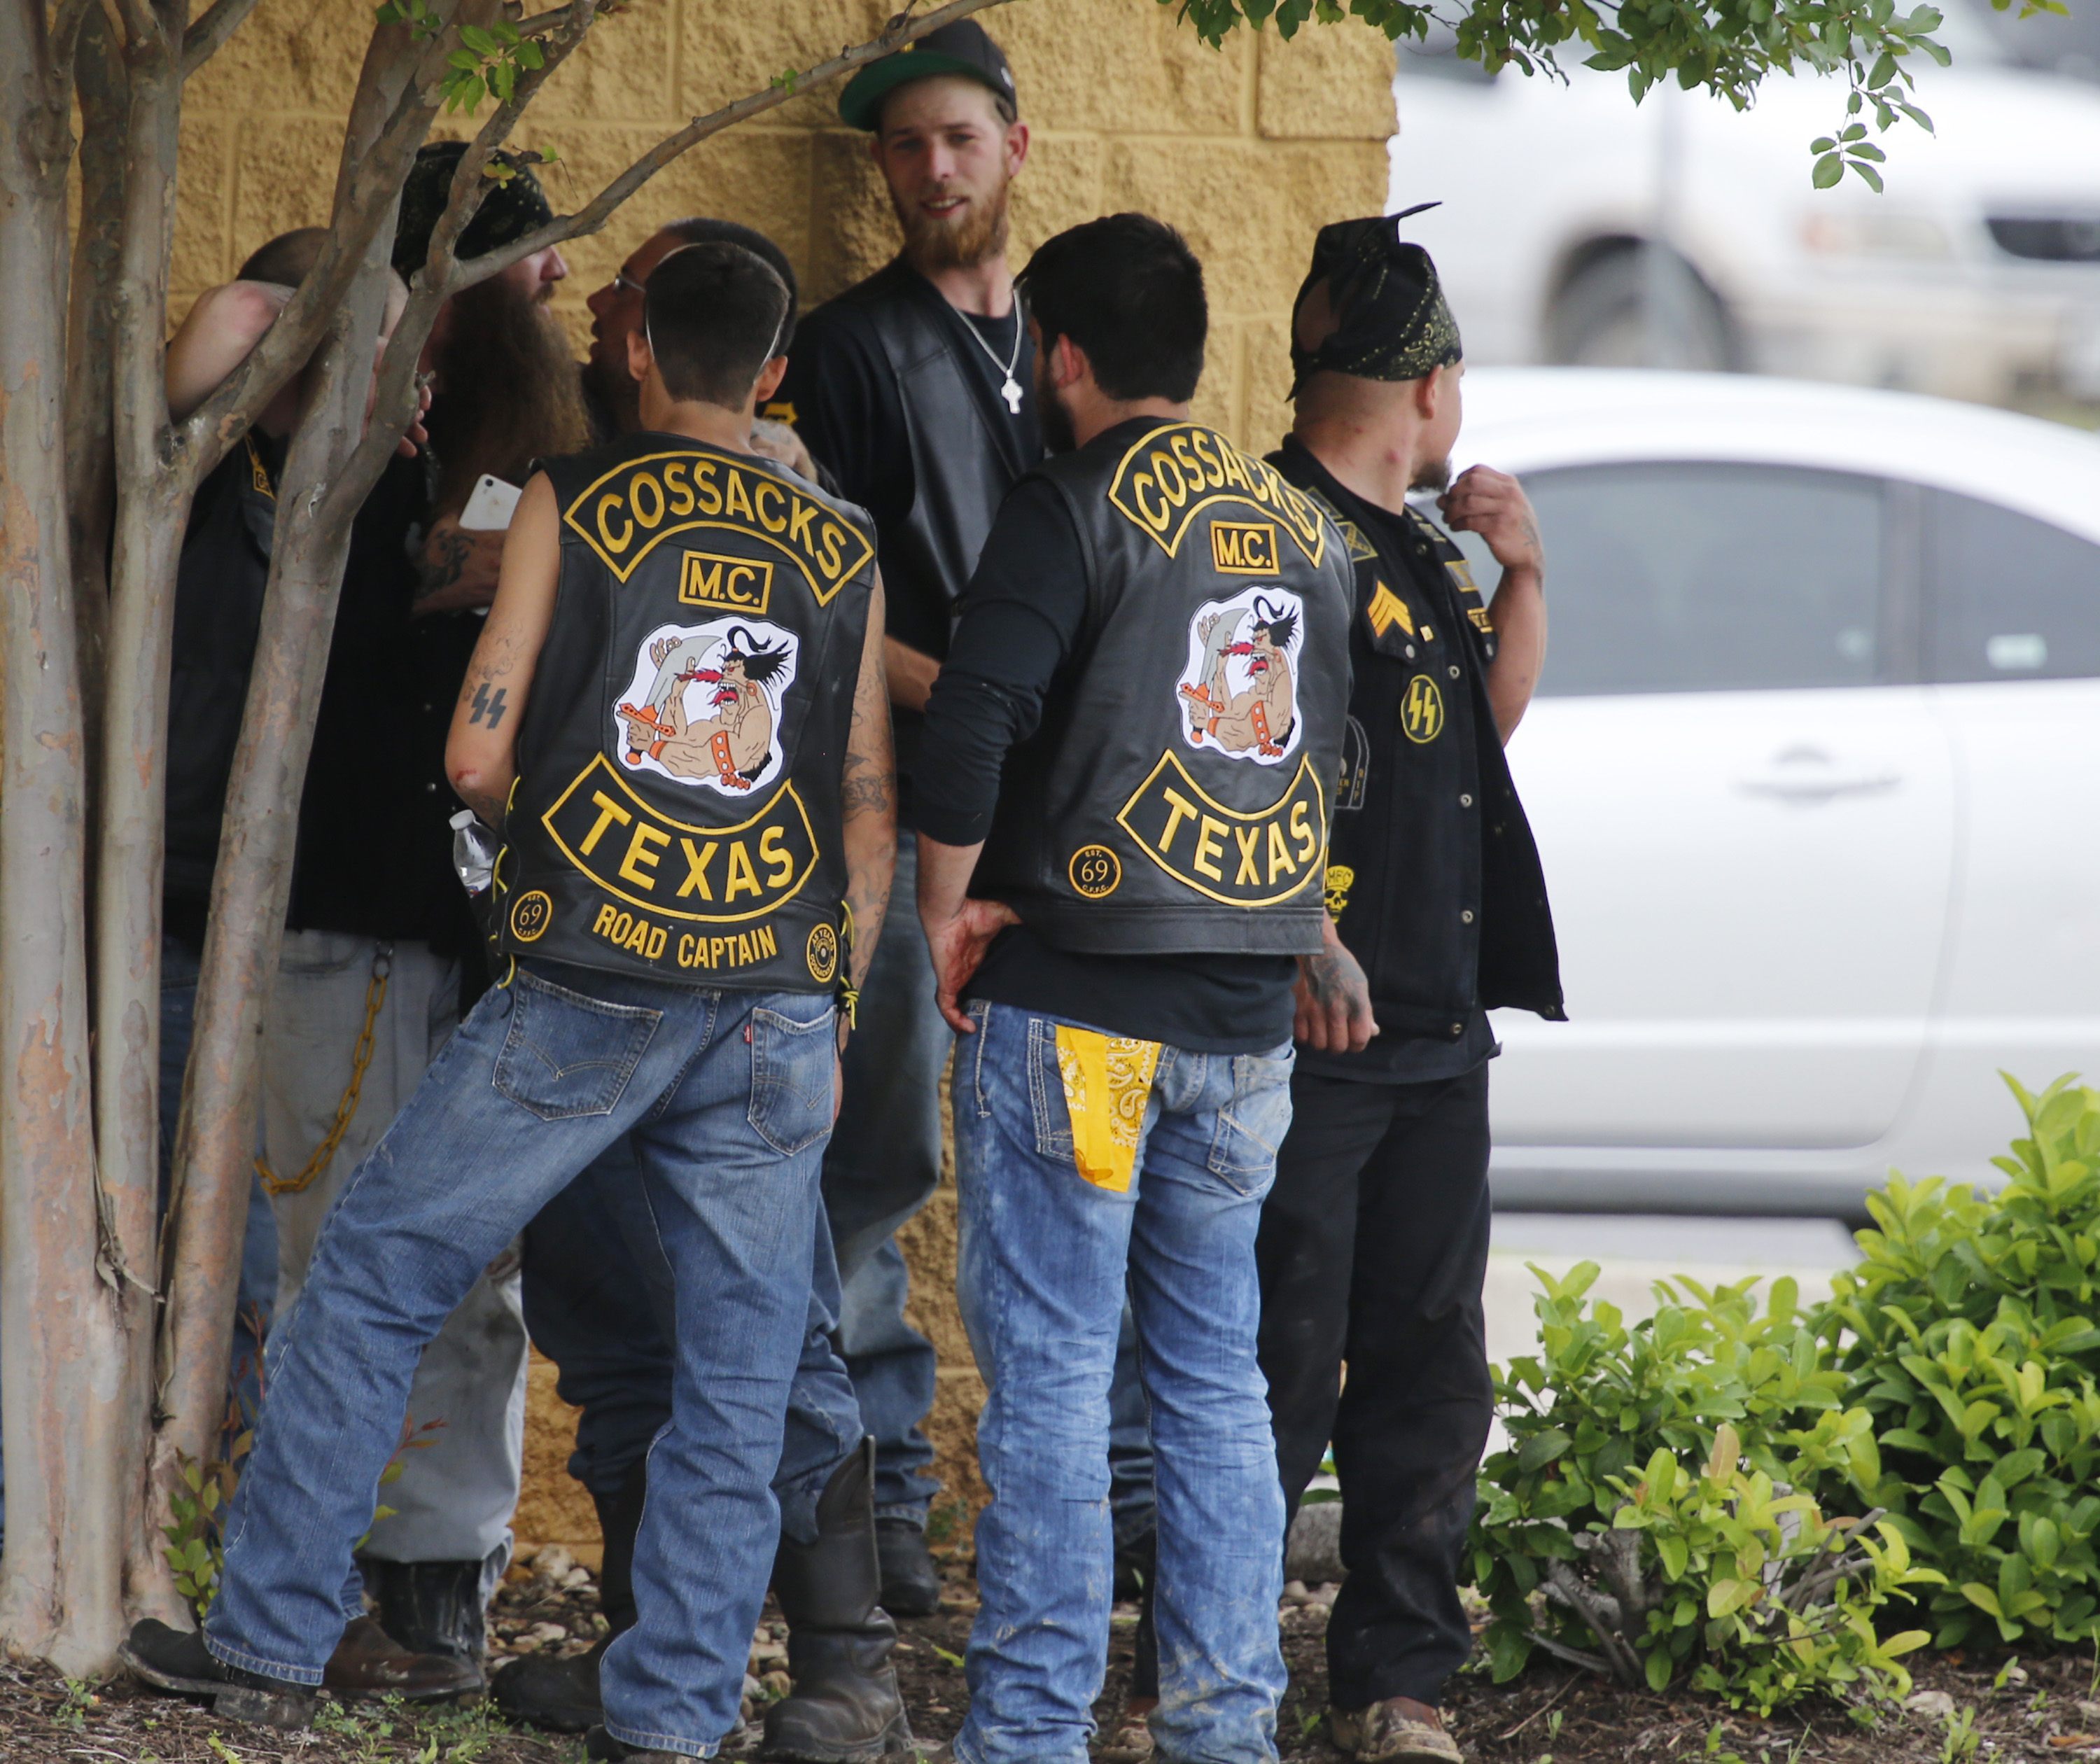 Memo Violence long simmered between rival Texas biker gangs Breitbart